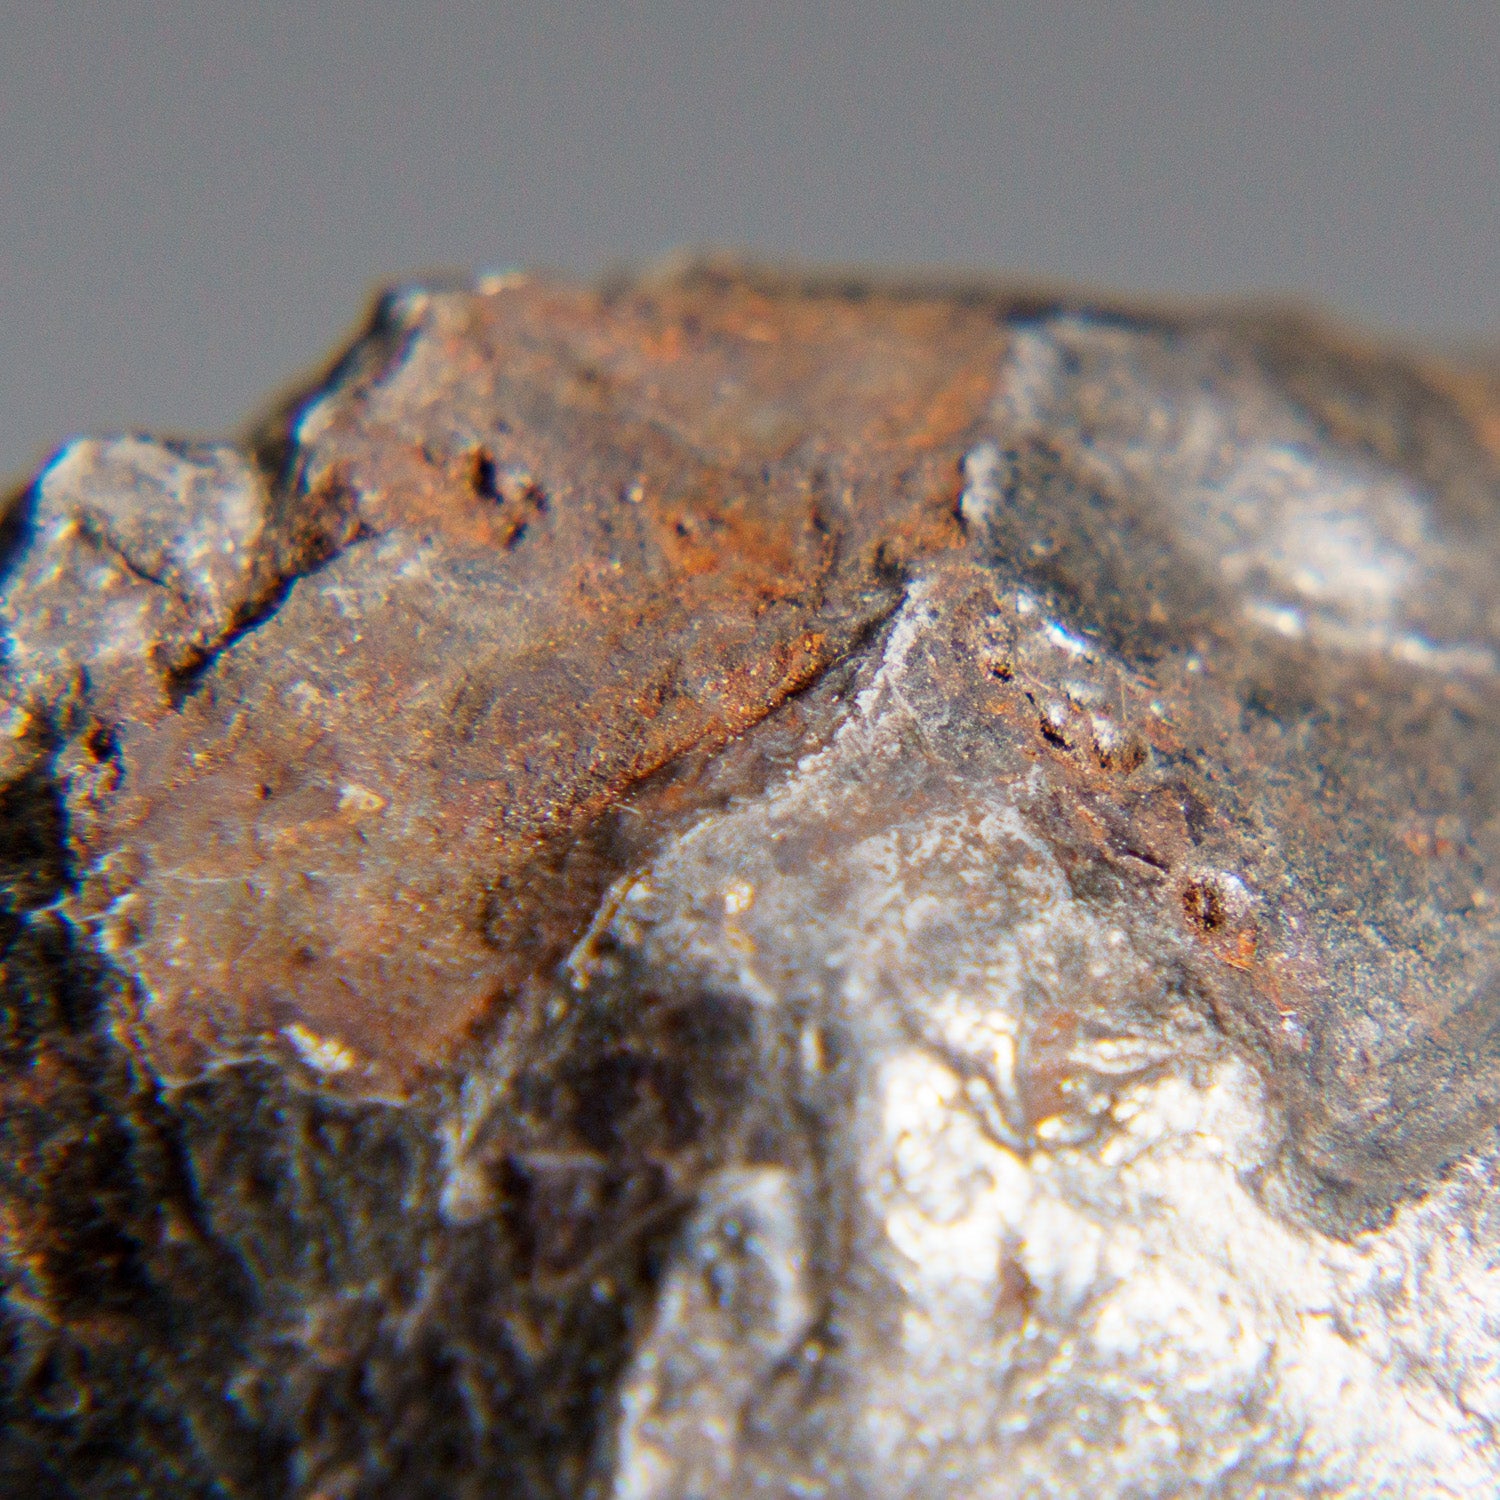 Genuine Natural Sikhote-Alin Meteorite from Russia (68.3 grams)